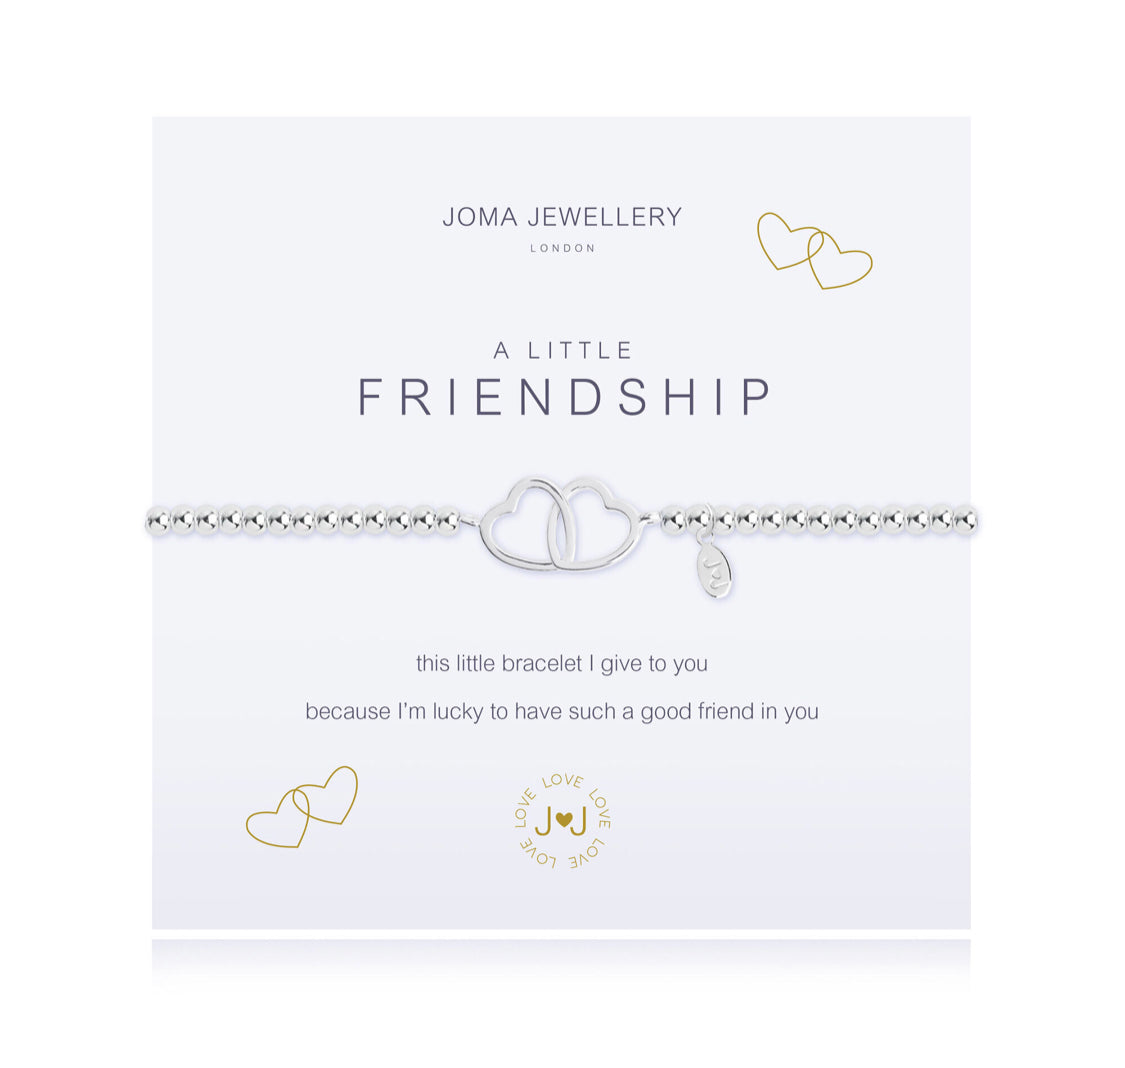 Joma Jewellery 'A Little' Friendship